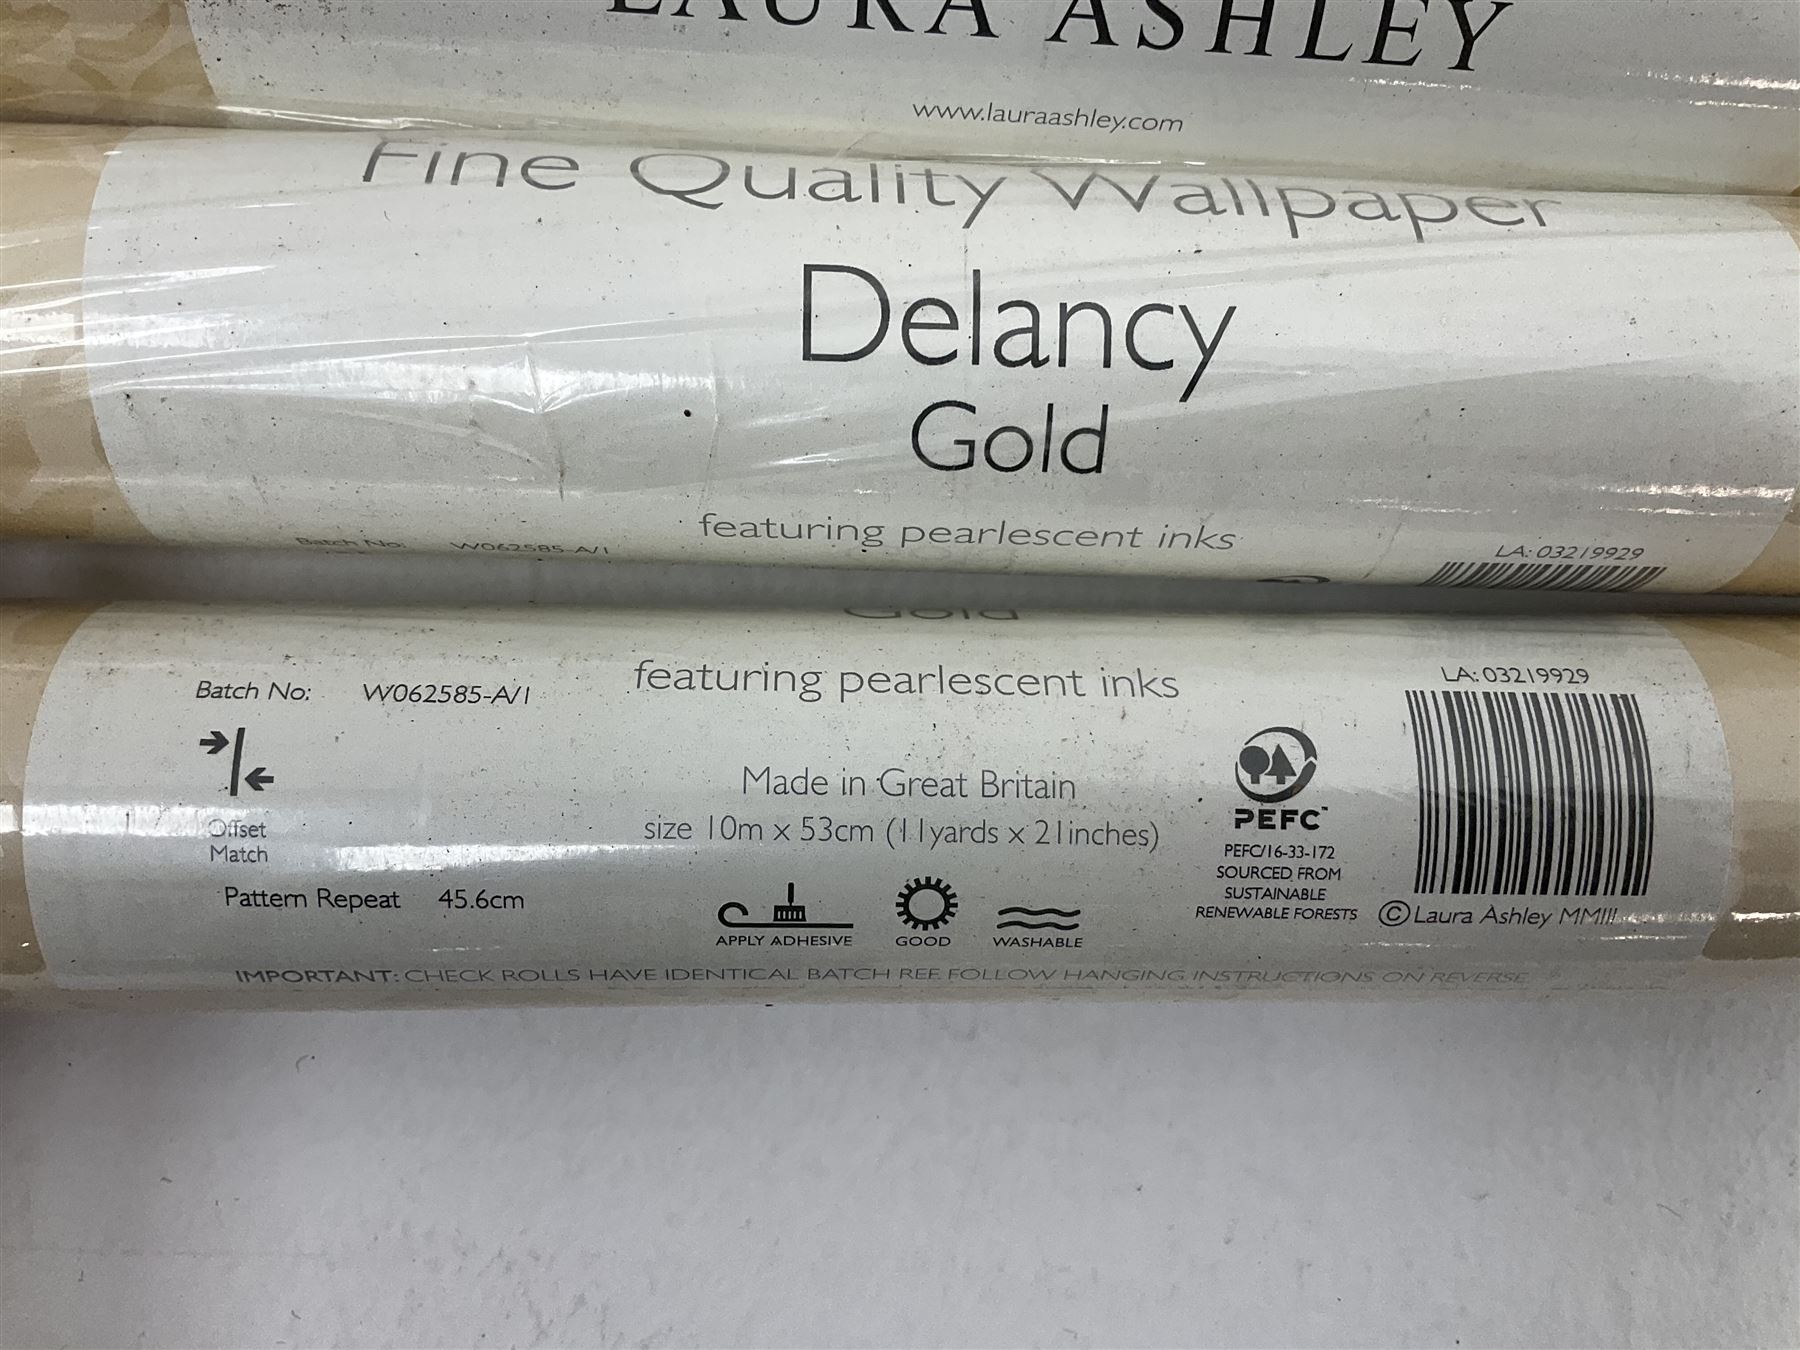 Seven rolls of Laura Ashley Delaney Gold wallpaper (W10m - Image 2 of 2